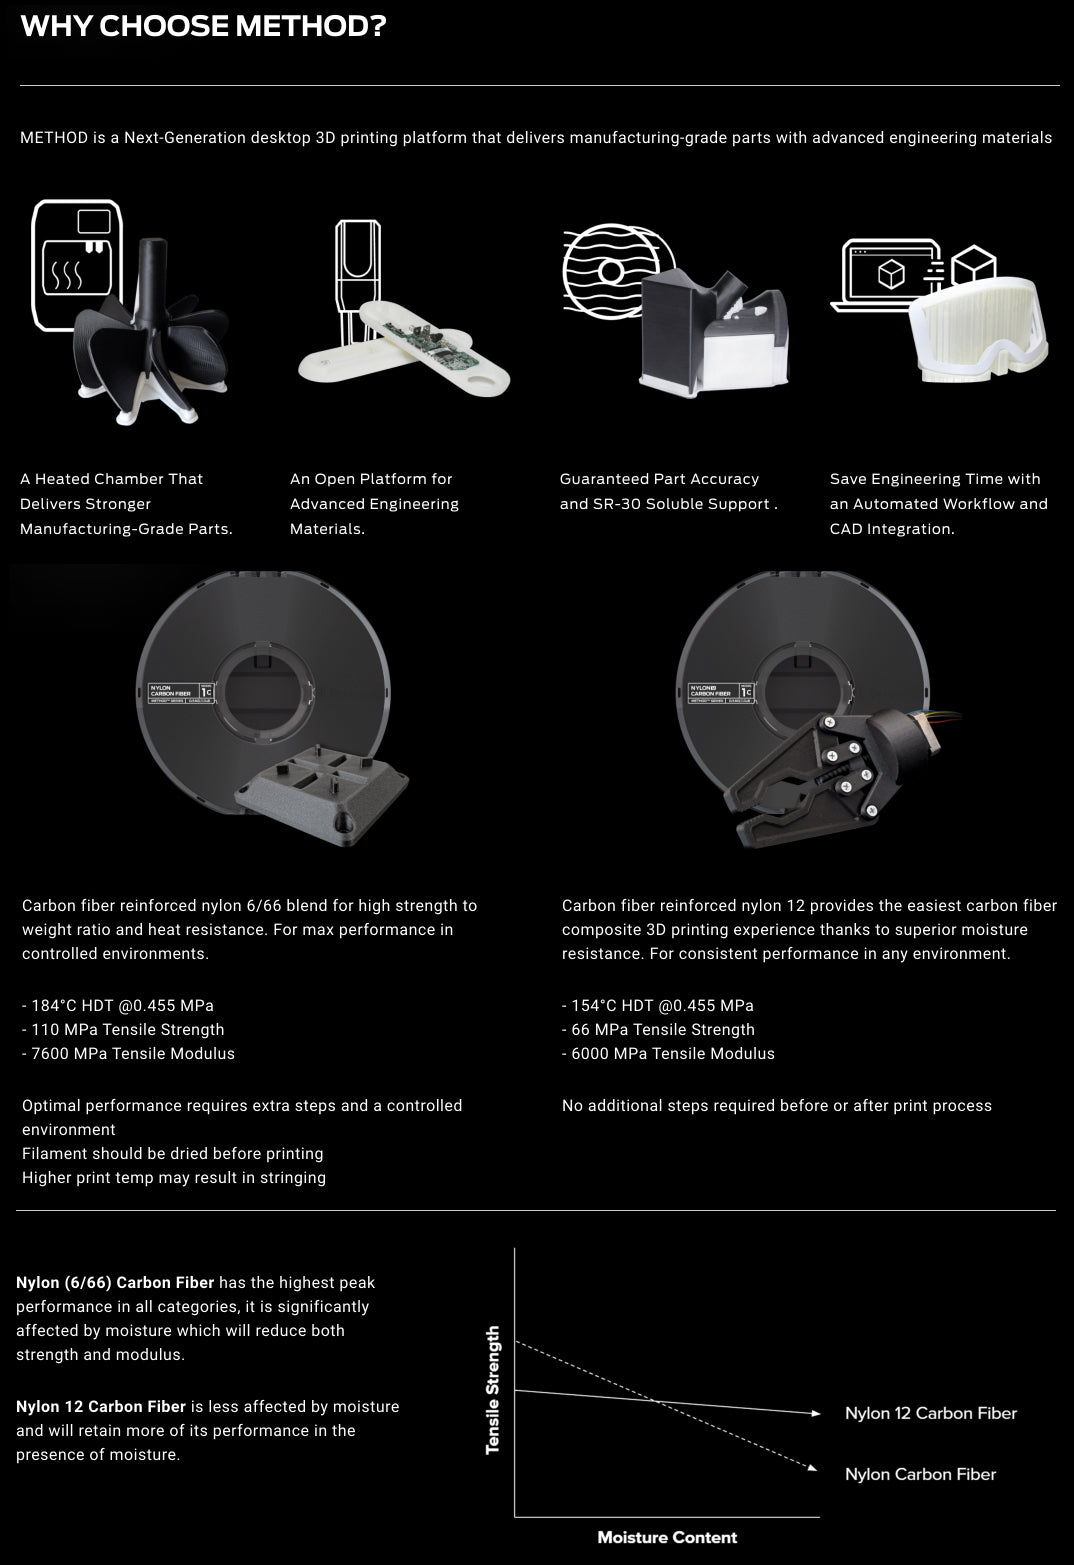 MakerBot-METHOD-3D-Printer-Carbon-Fiber-Edition-Description